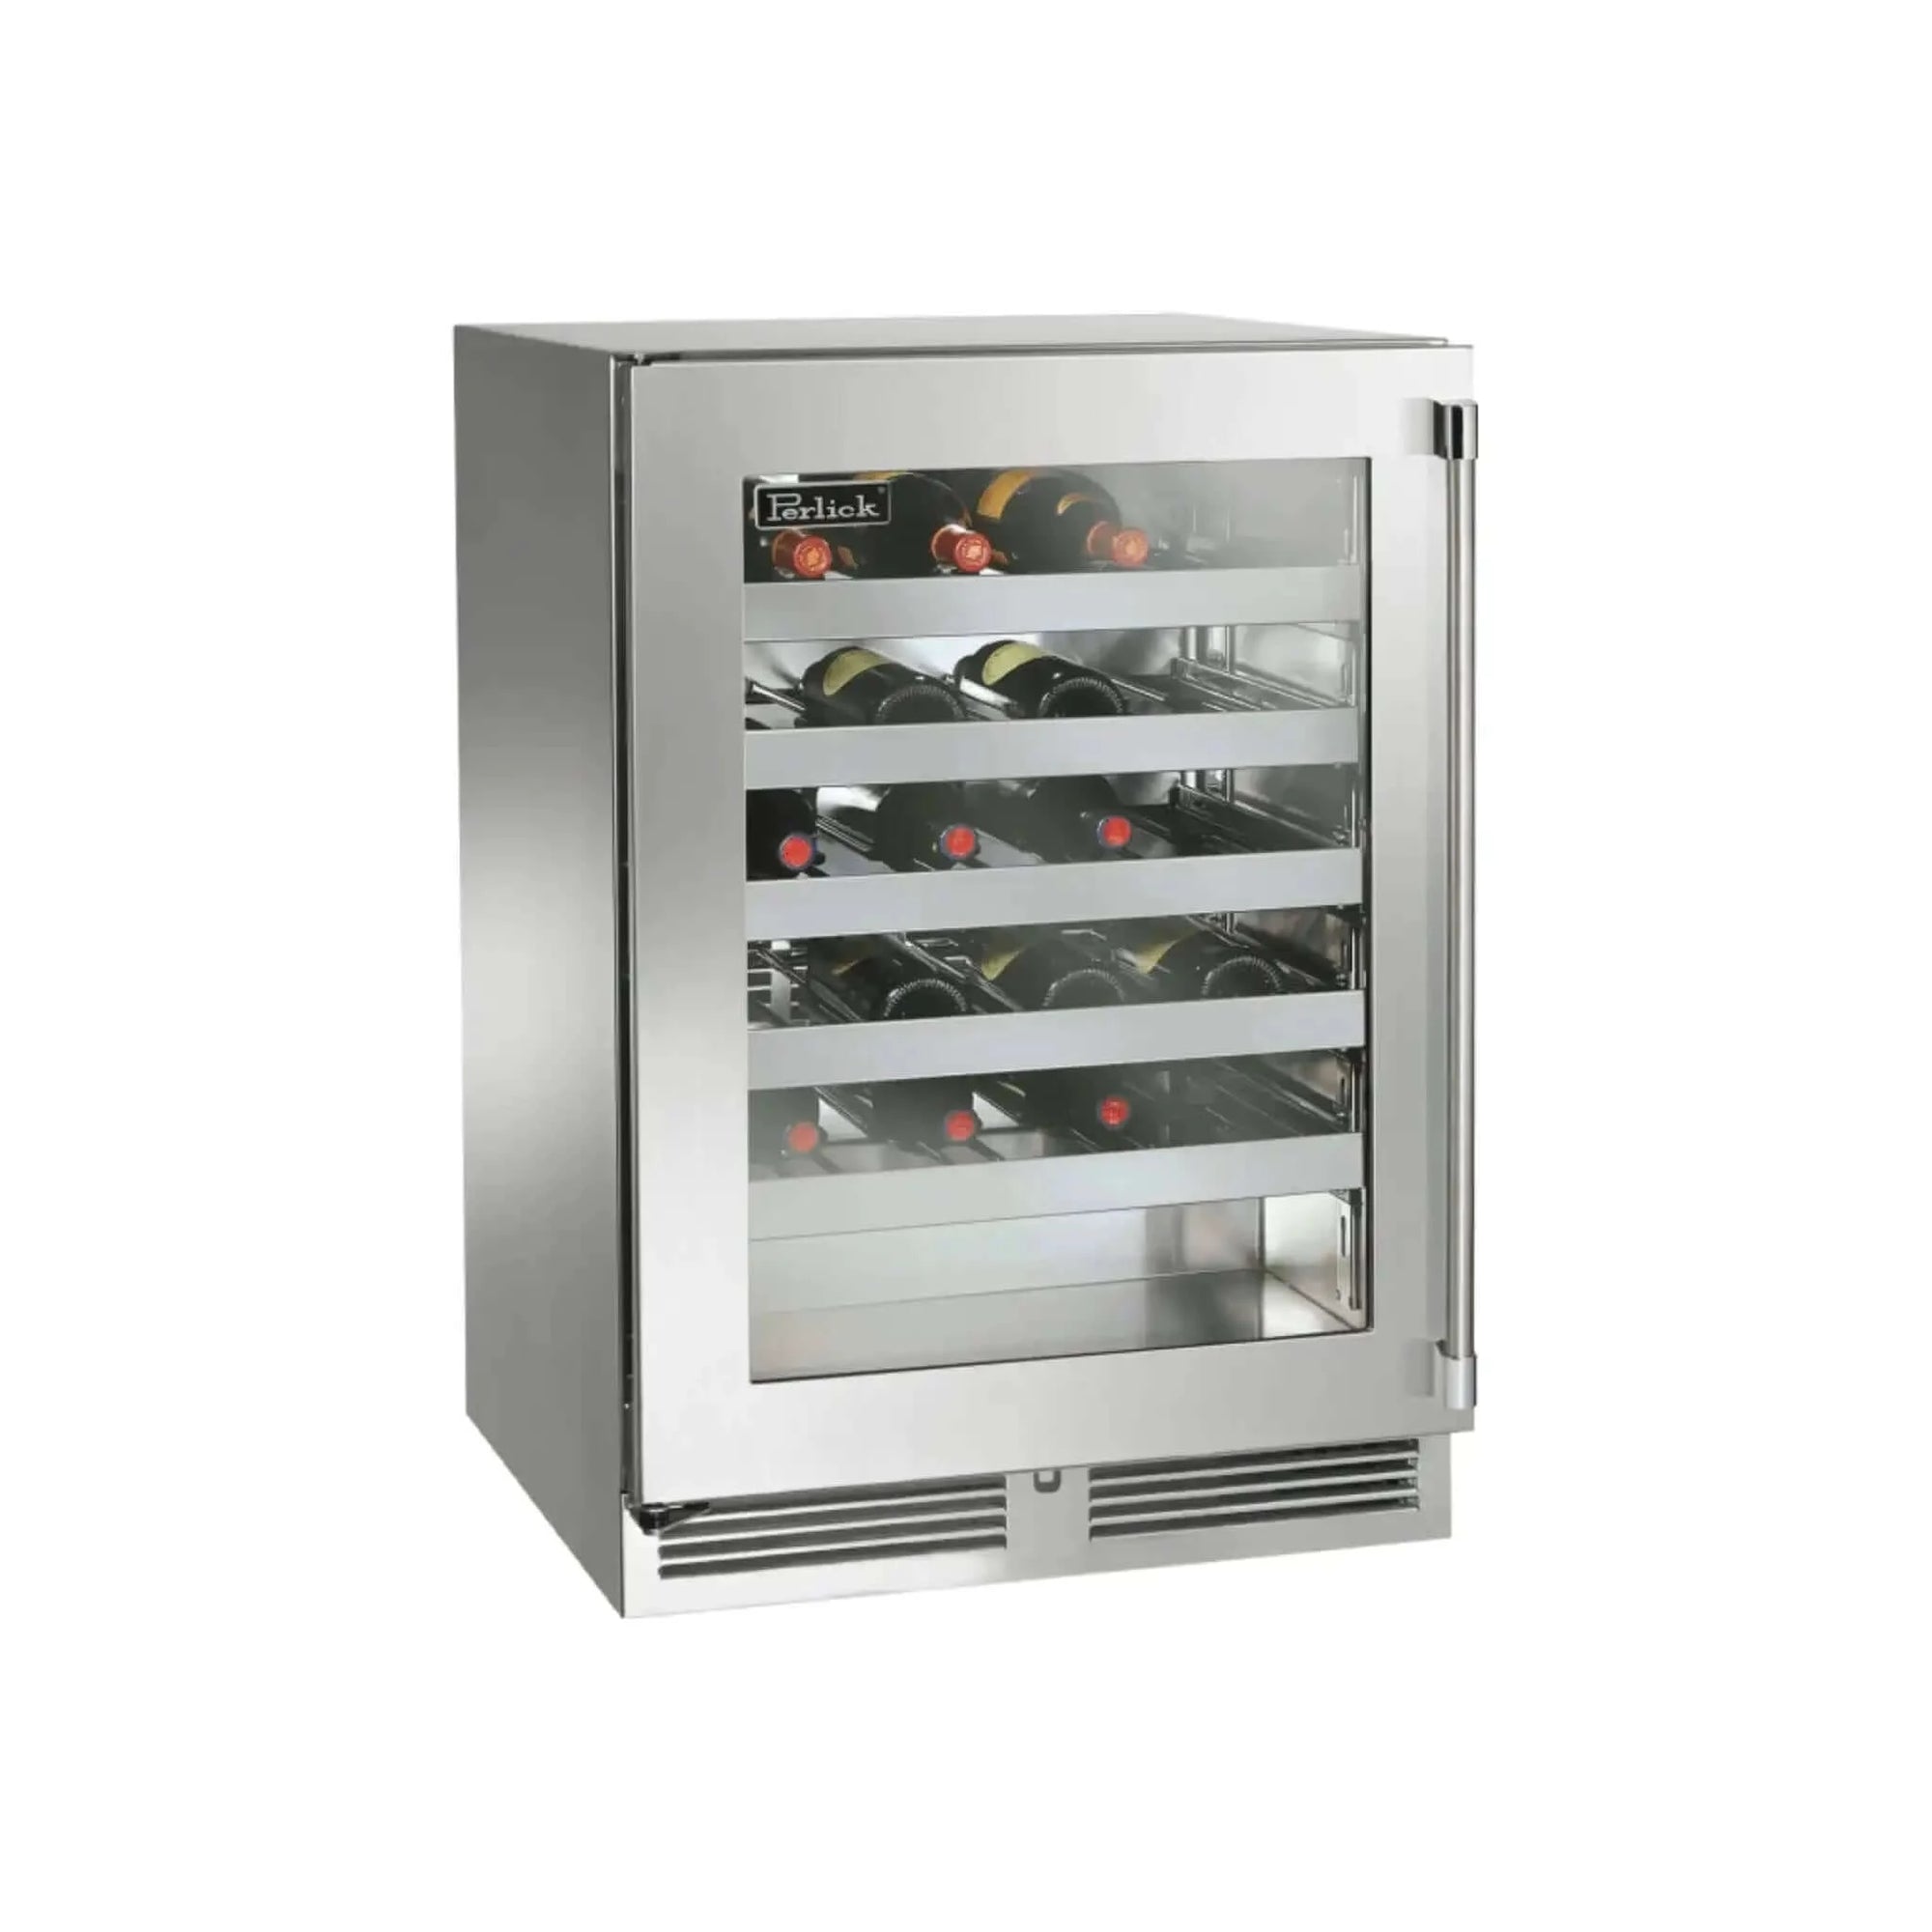 Perlick 24 Signature Series Outdoor Freezer - HP24FO, Right Hinge / Integrated Panel-Ready Solid Door